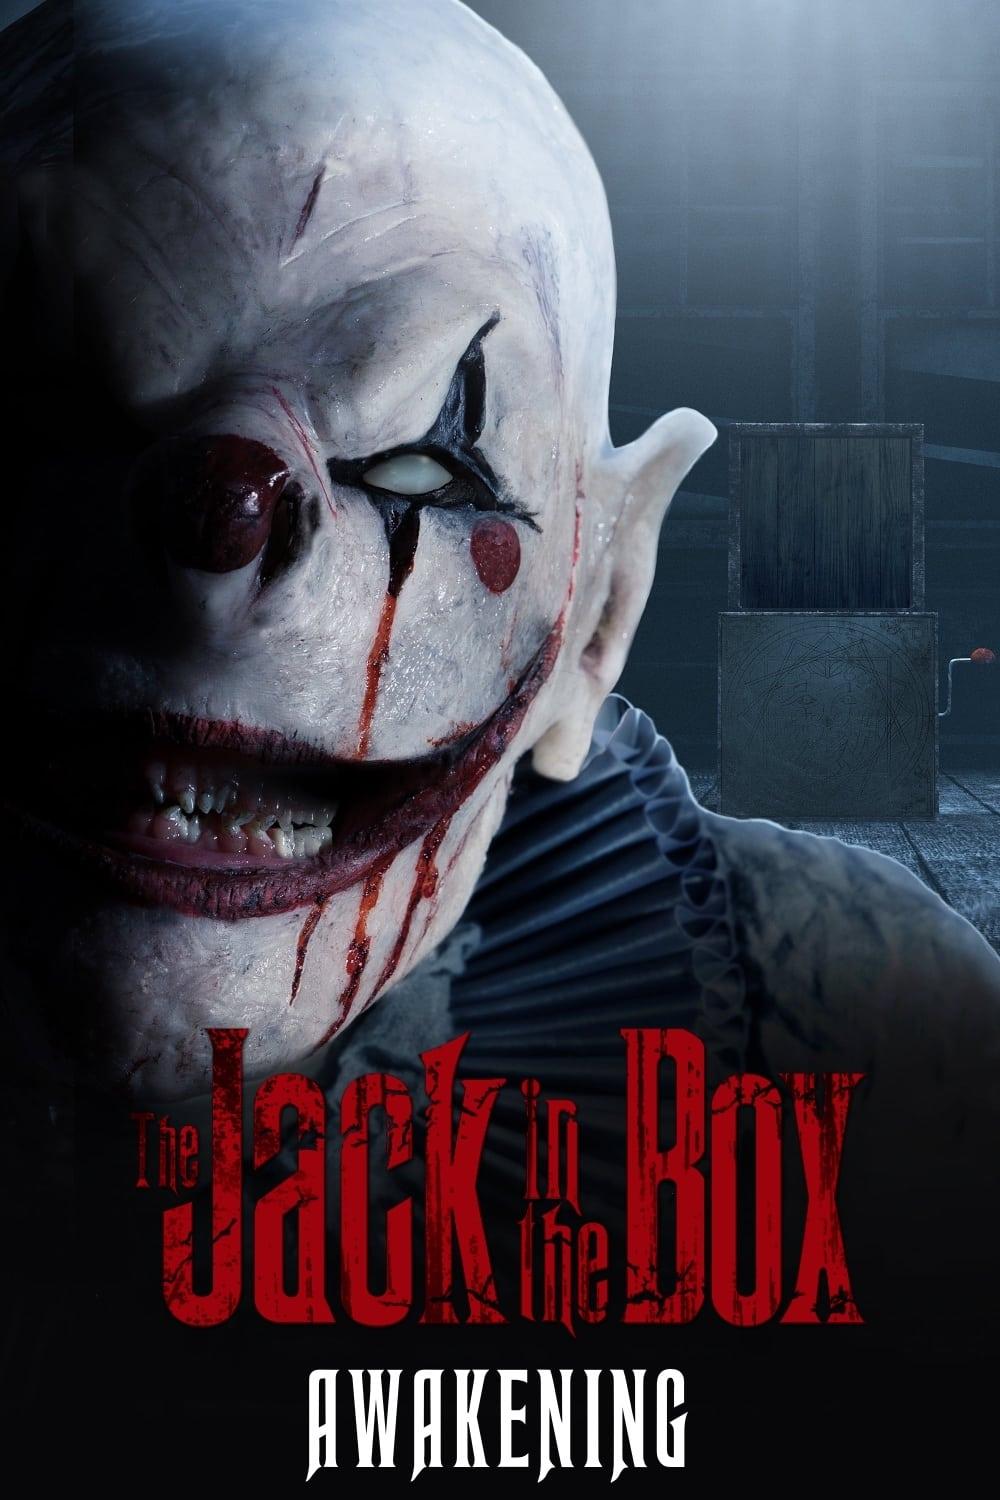 The Jack in the Box: Awakening poster